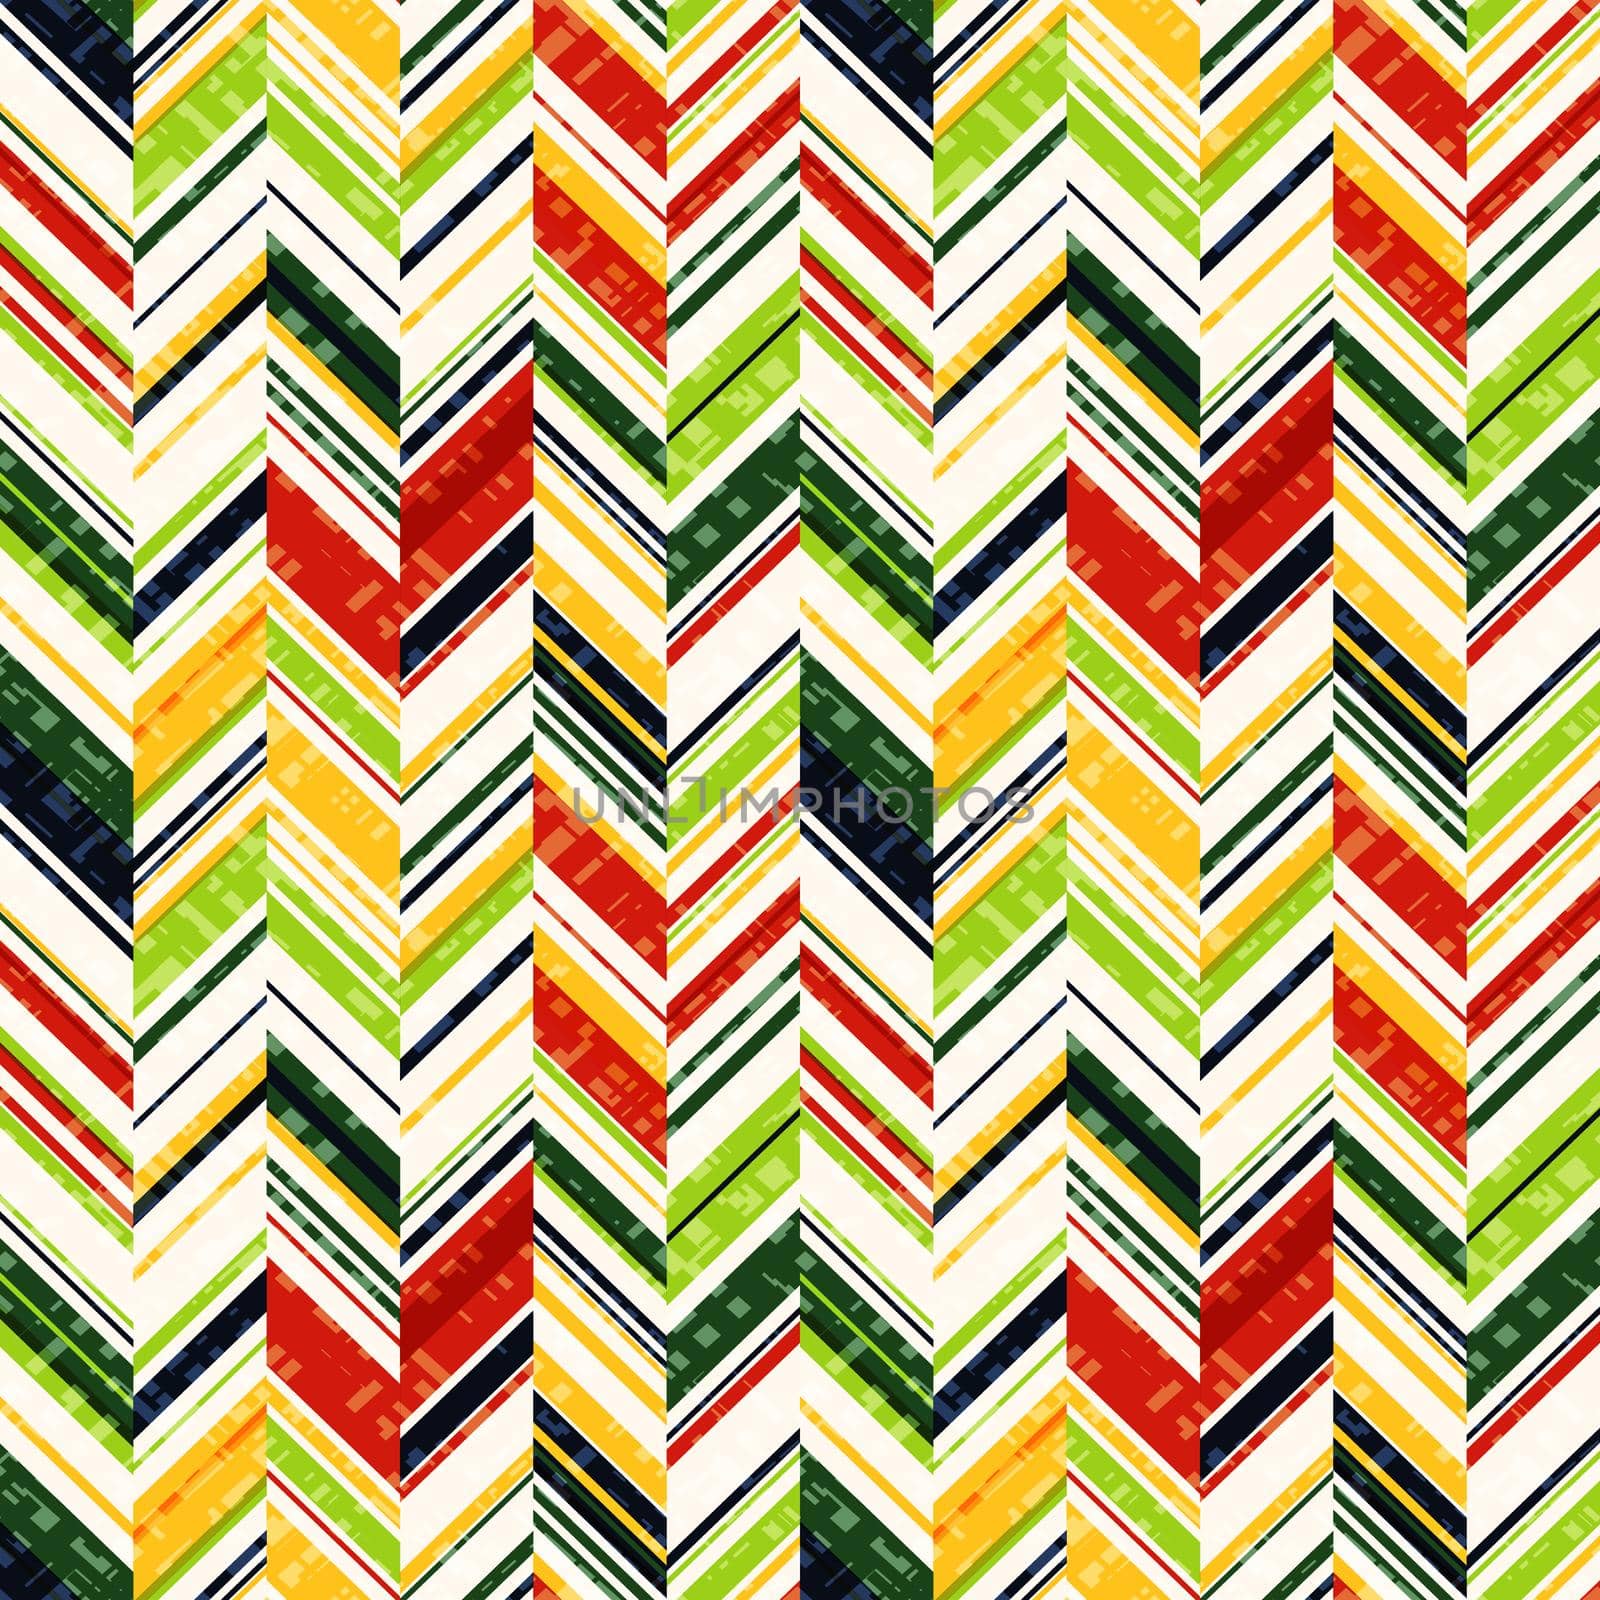 Abstract seamless pattern by Bobnevv